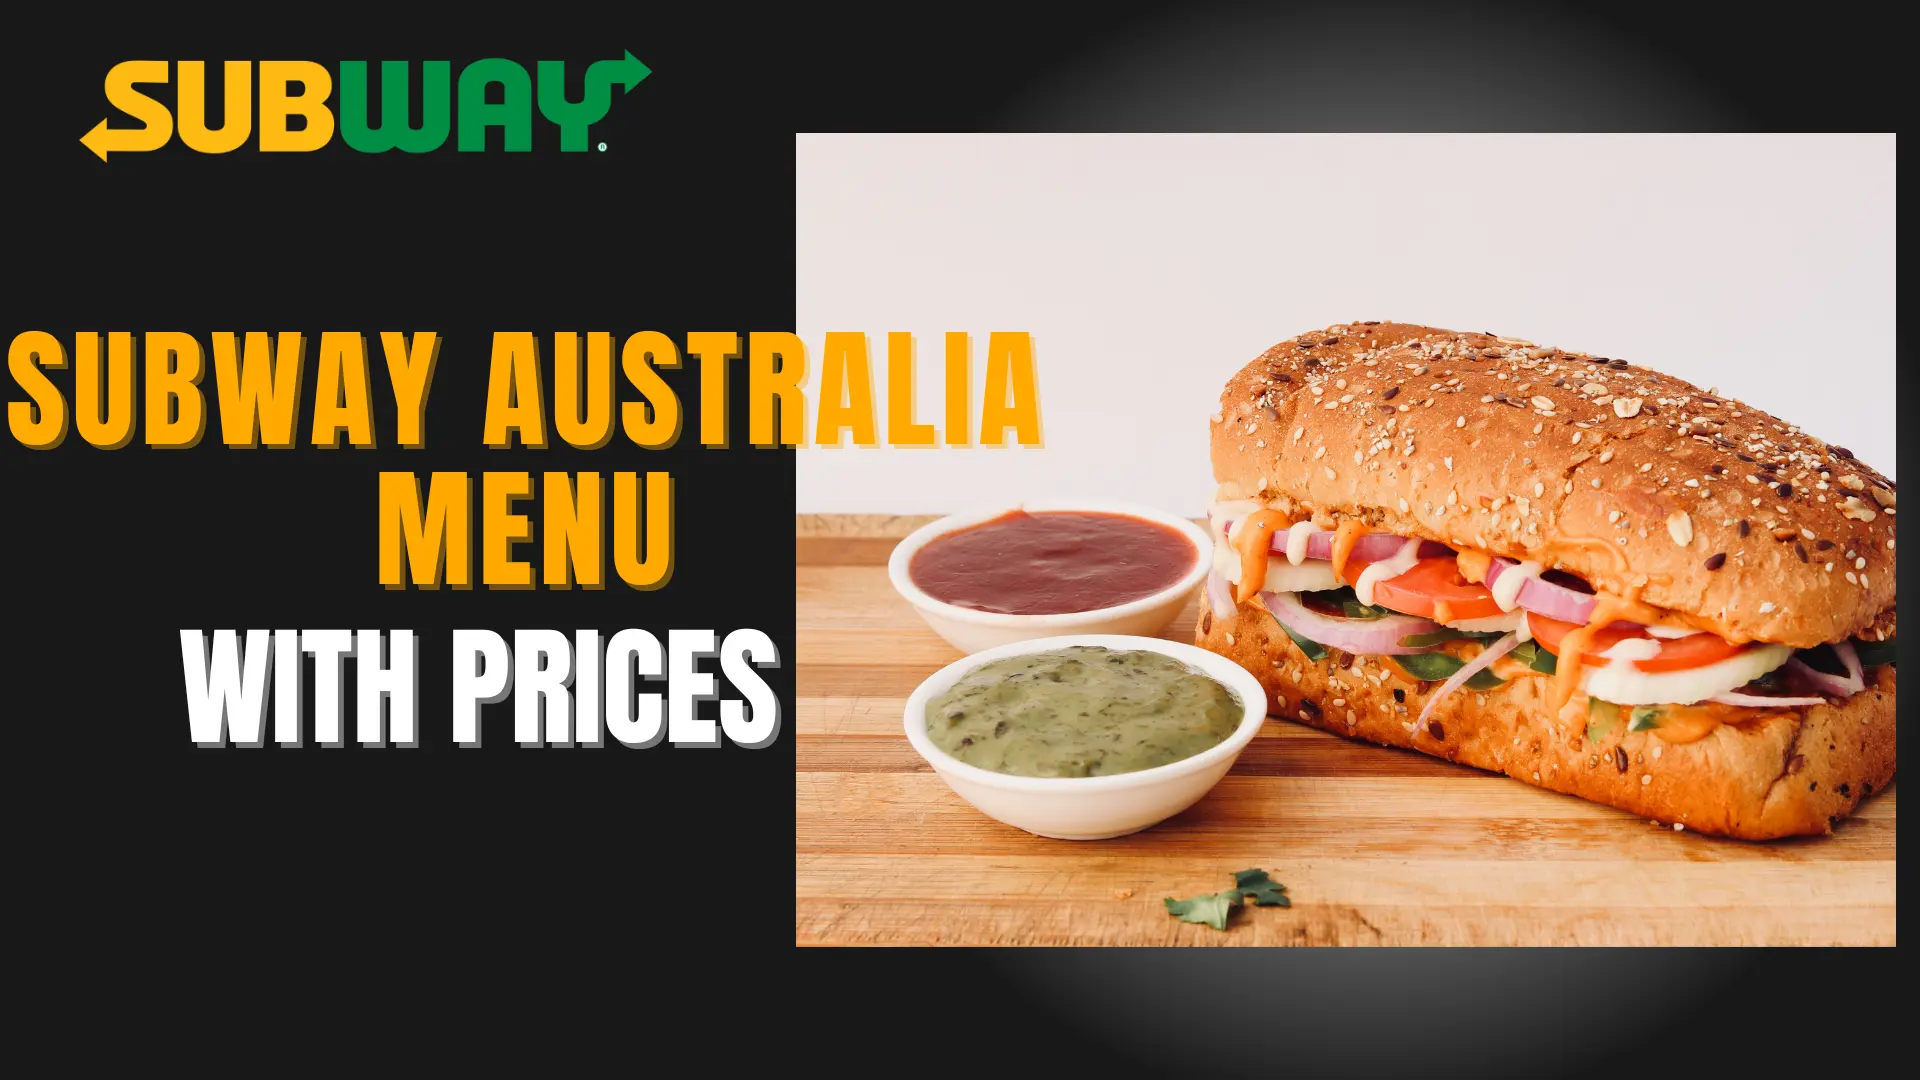 Subway Australia menu with prices